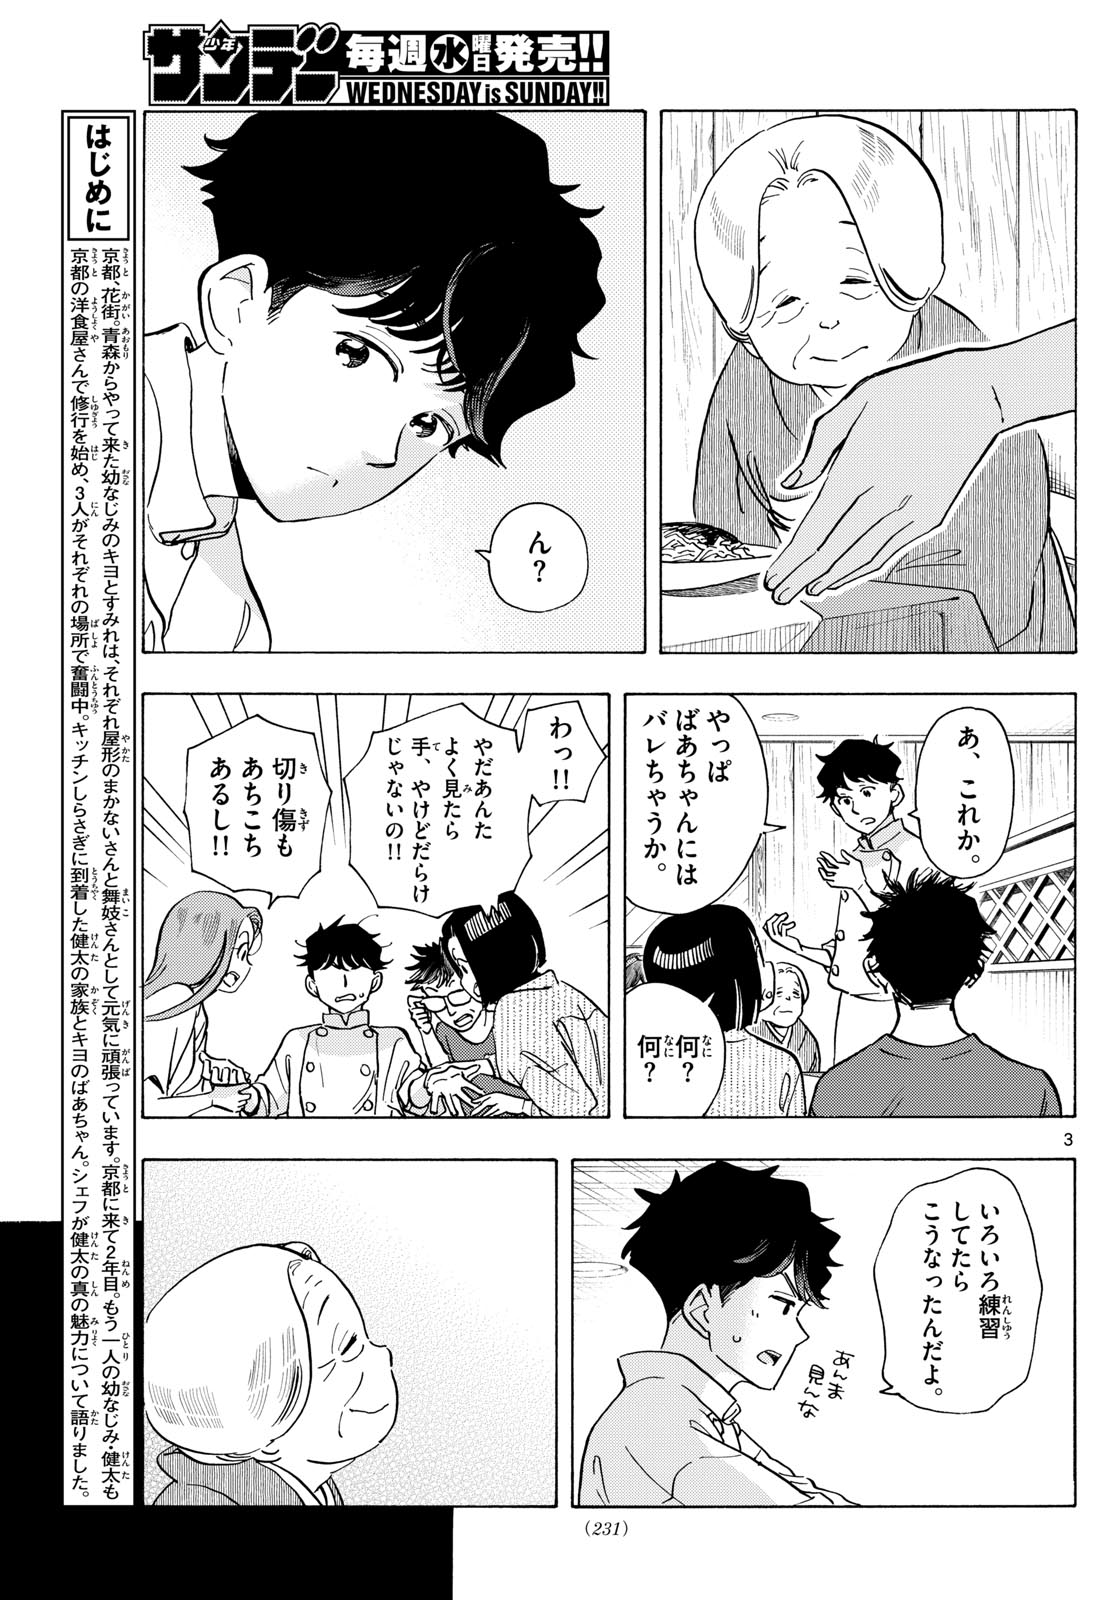 Maiko-san Chi no Makanai-san - Chapter 302 - Page 3